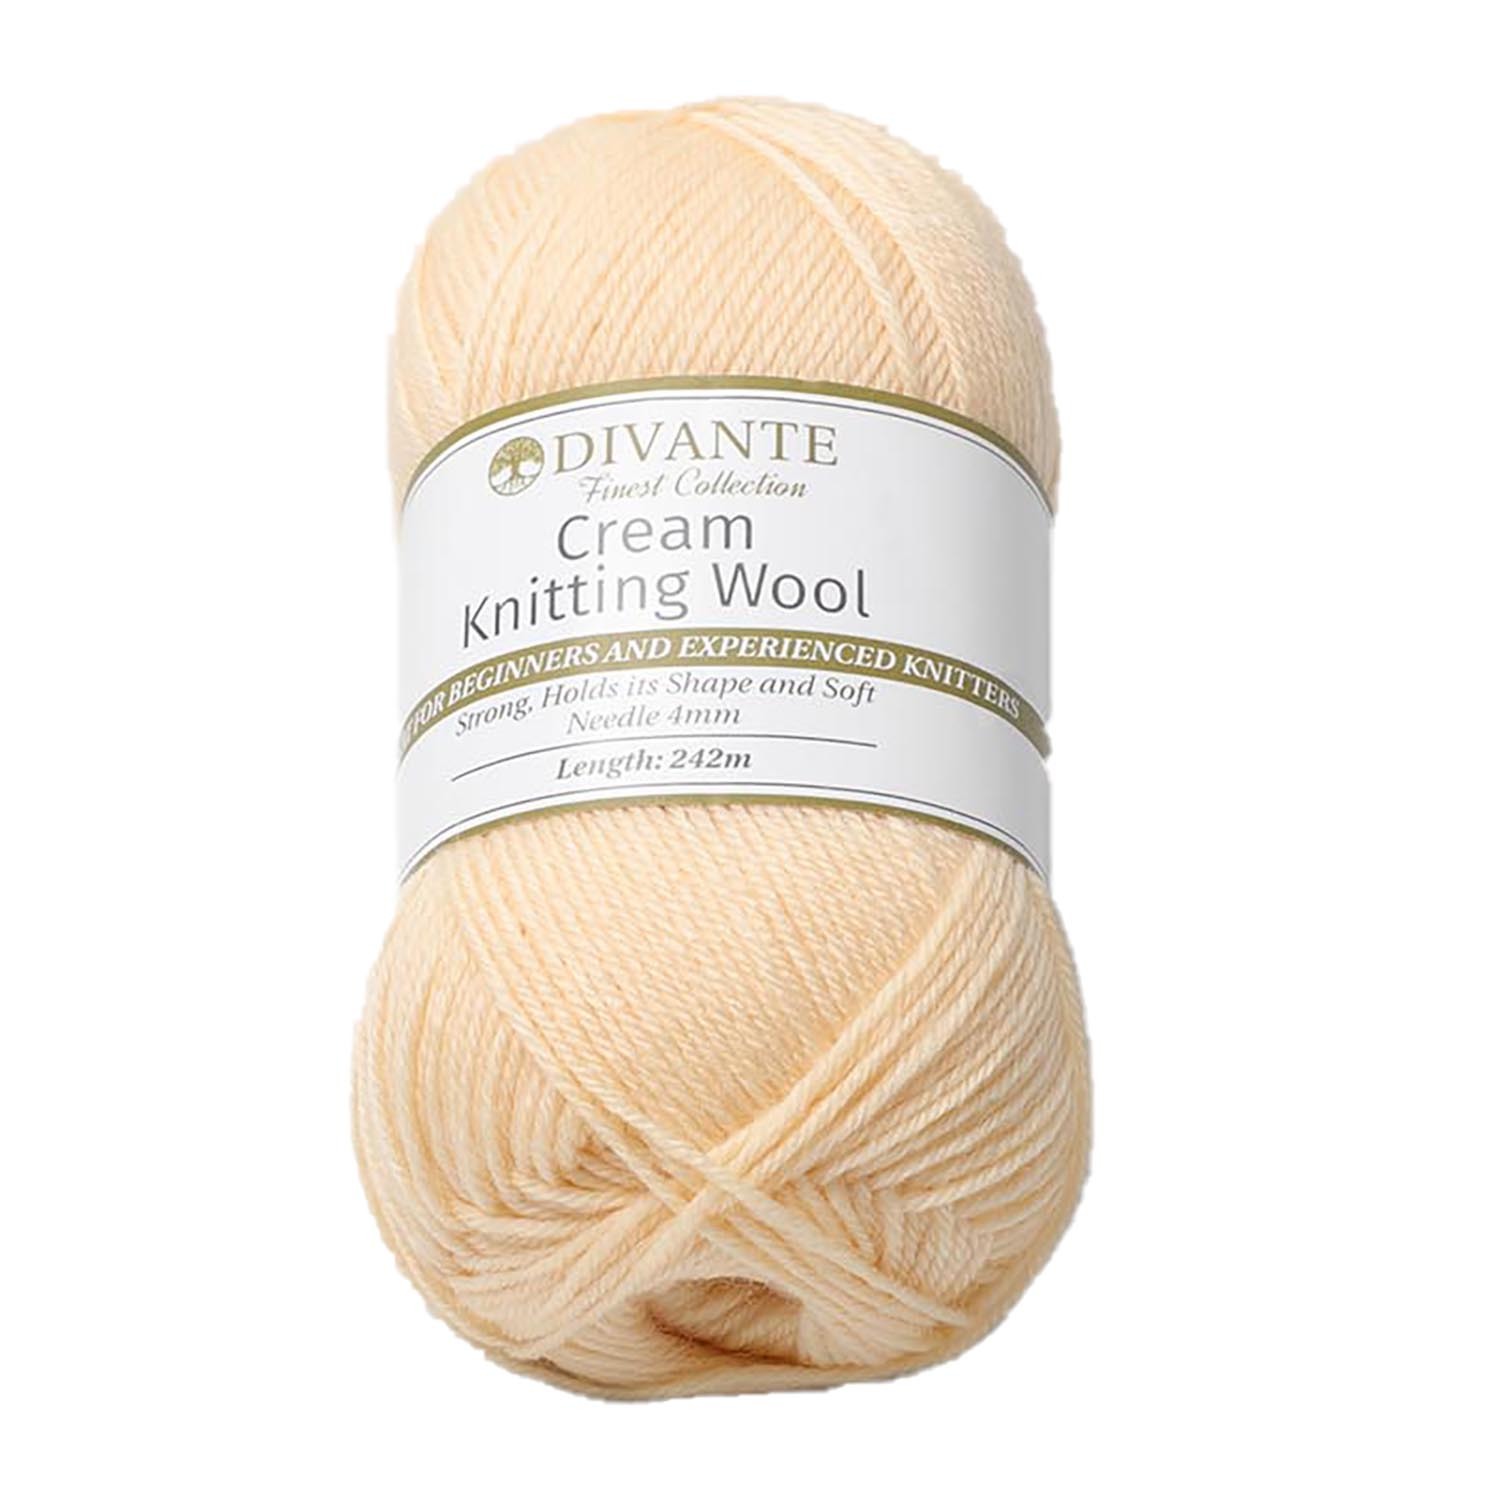 Divante Knitting Wool - Cream Image